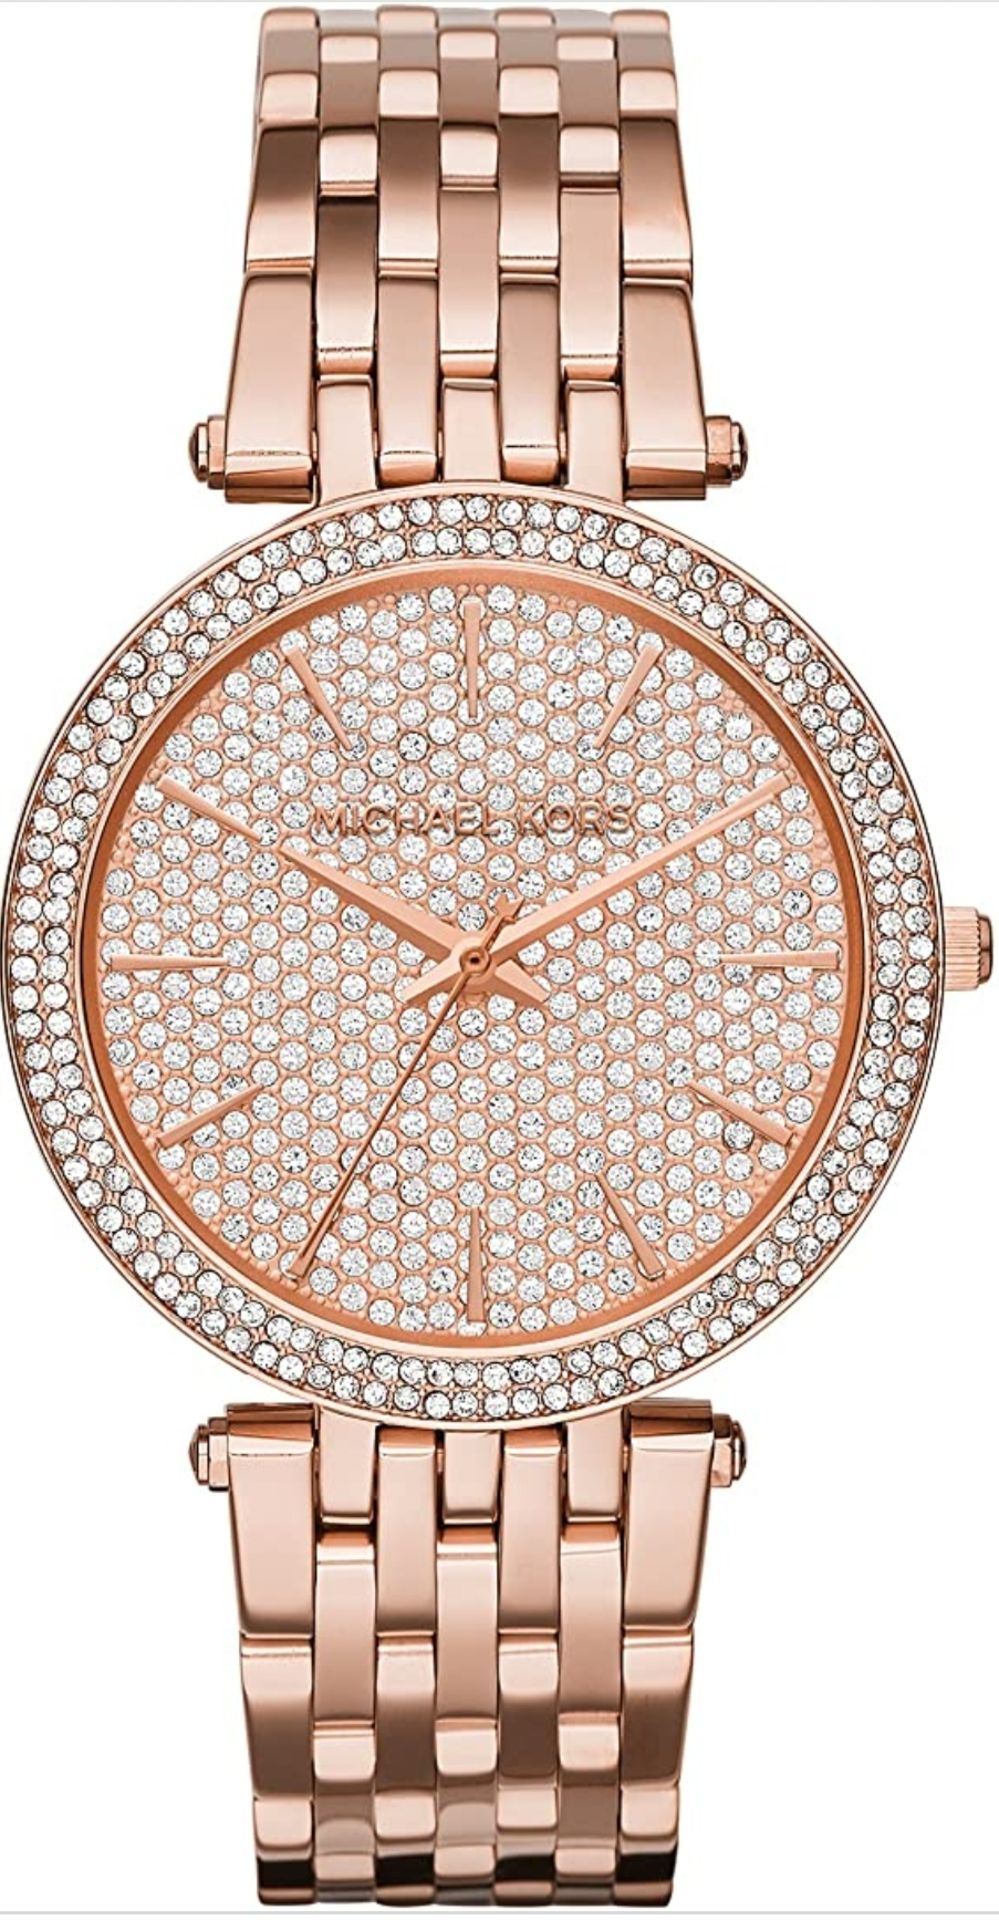 Michael Kors MK3439 Ladies Rose Gold Darci Quartz Watch